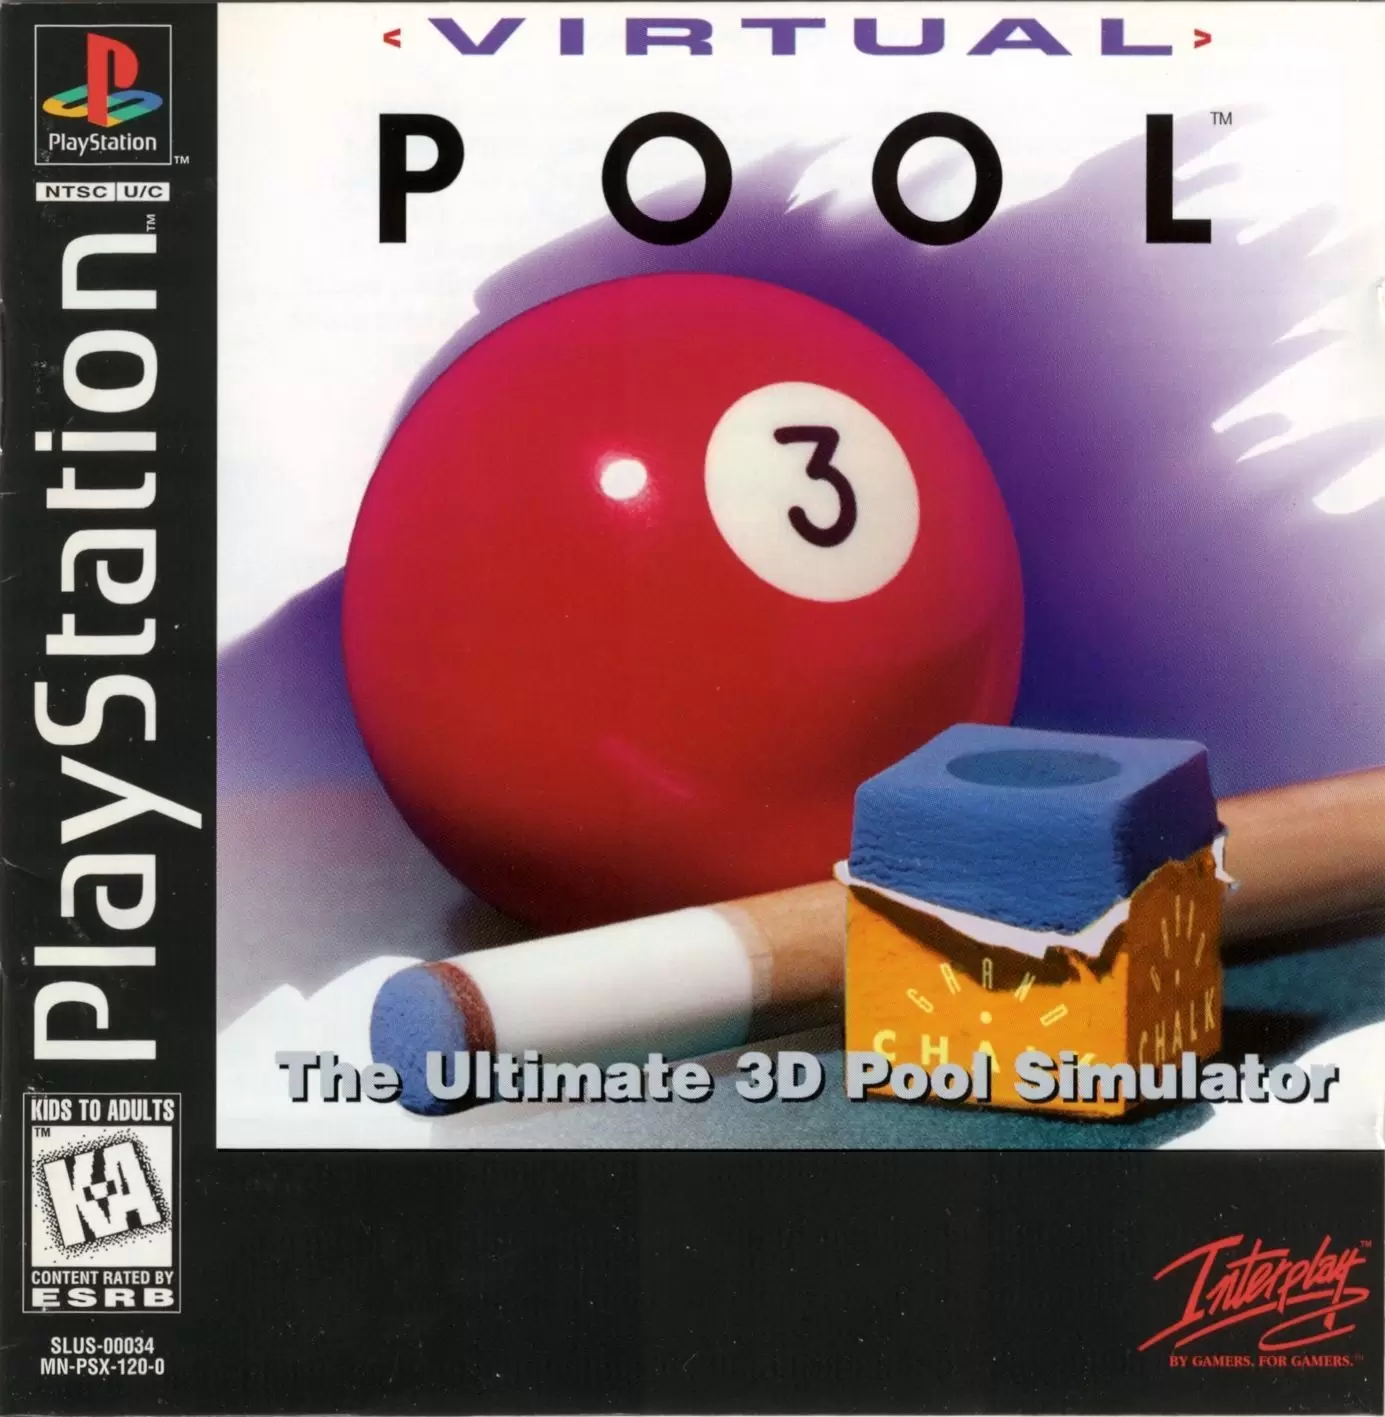 Playstation games - Virtual Pool